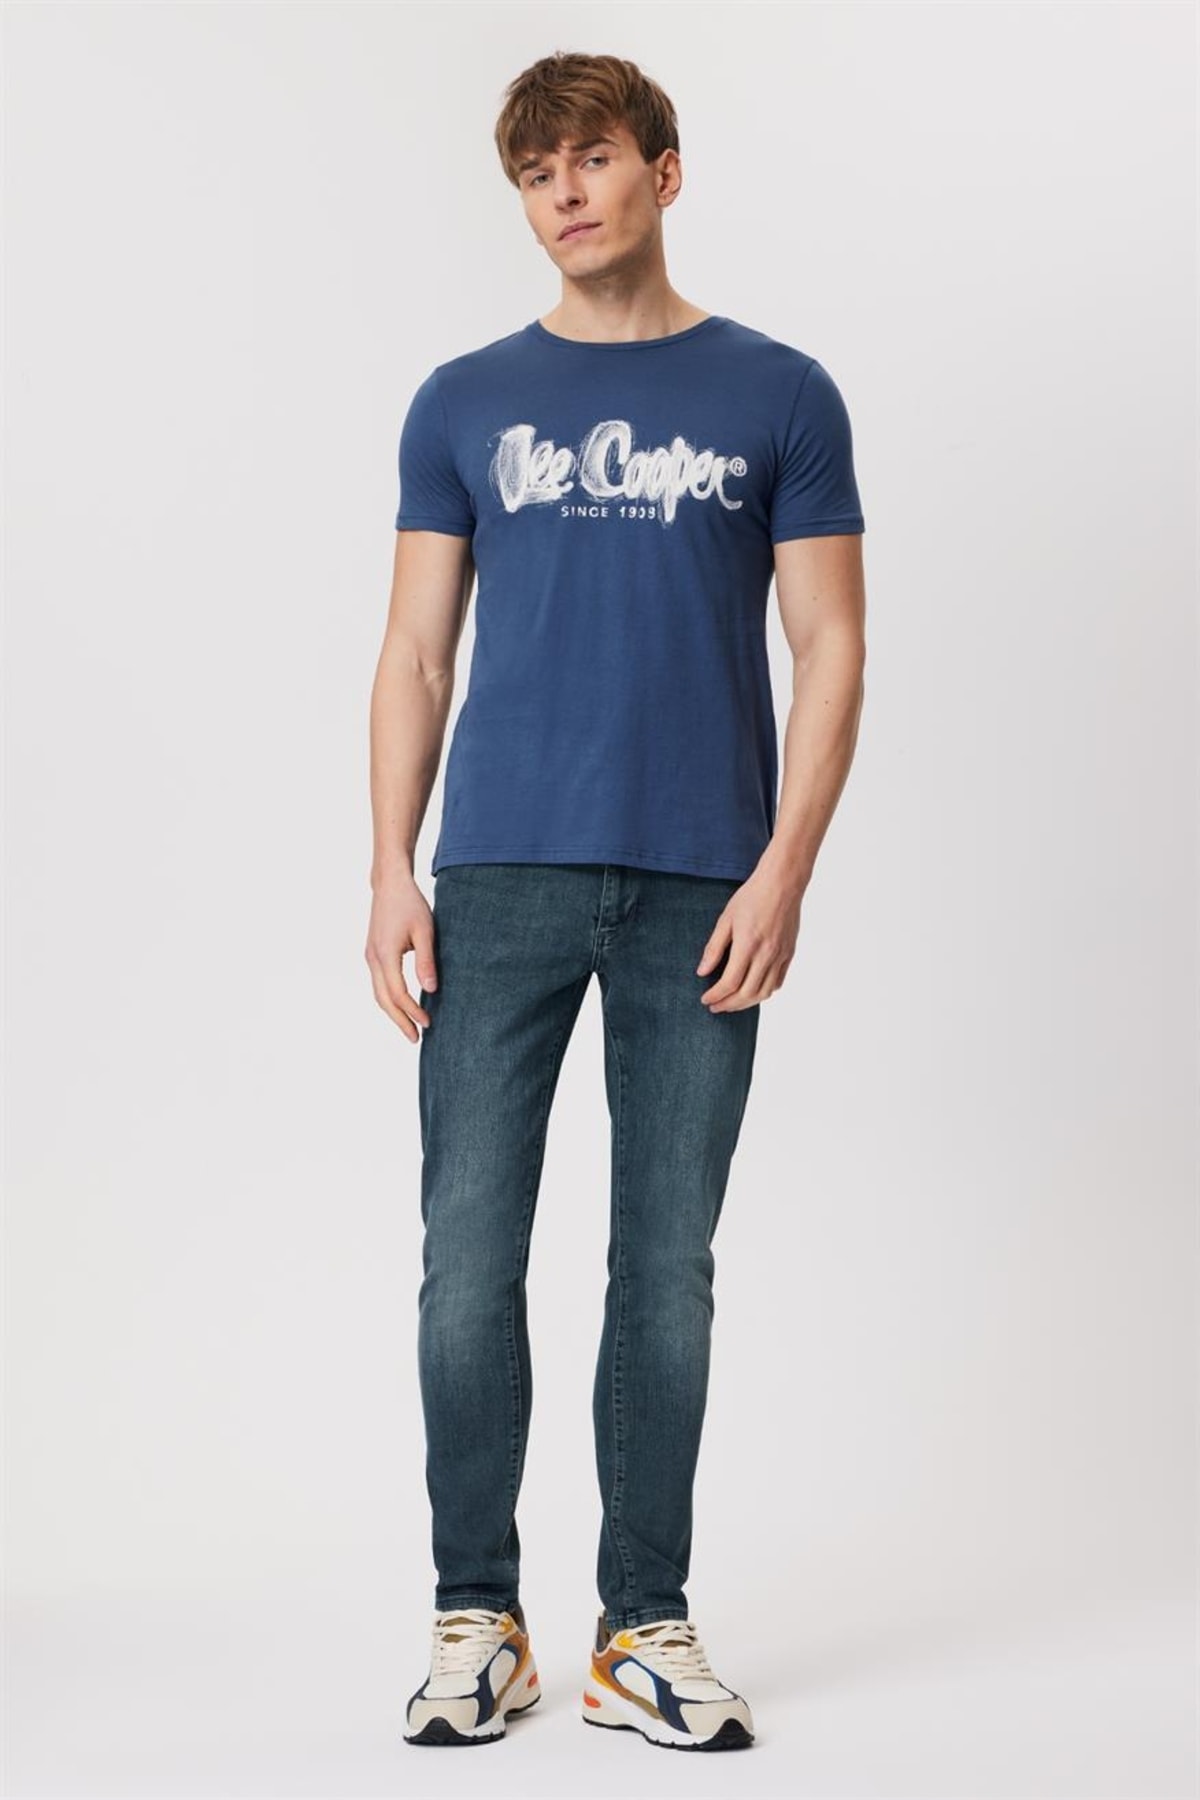 Lee Cooper Men's T-shirt Indigo